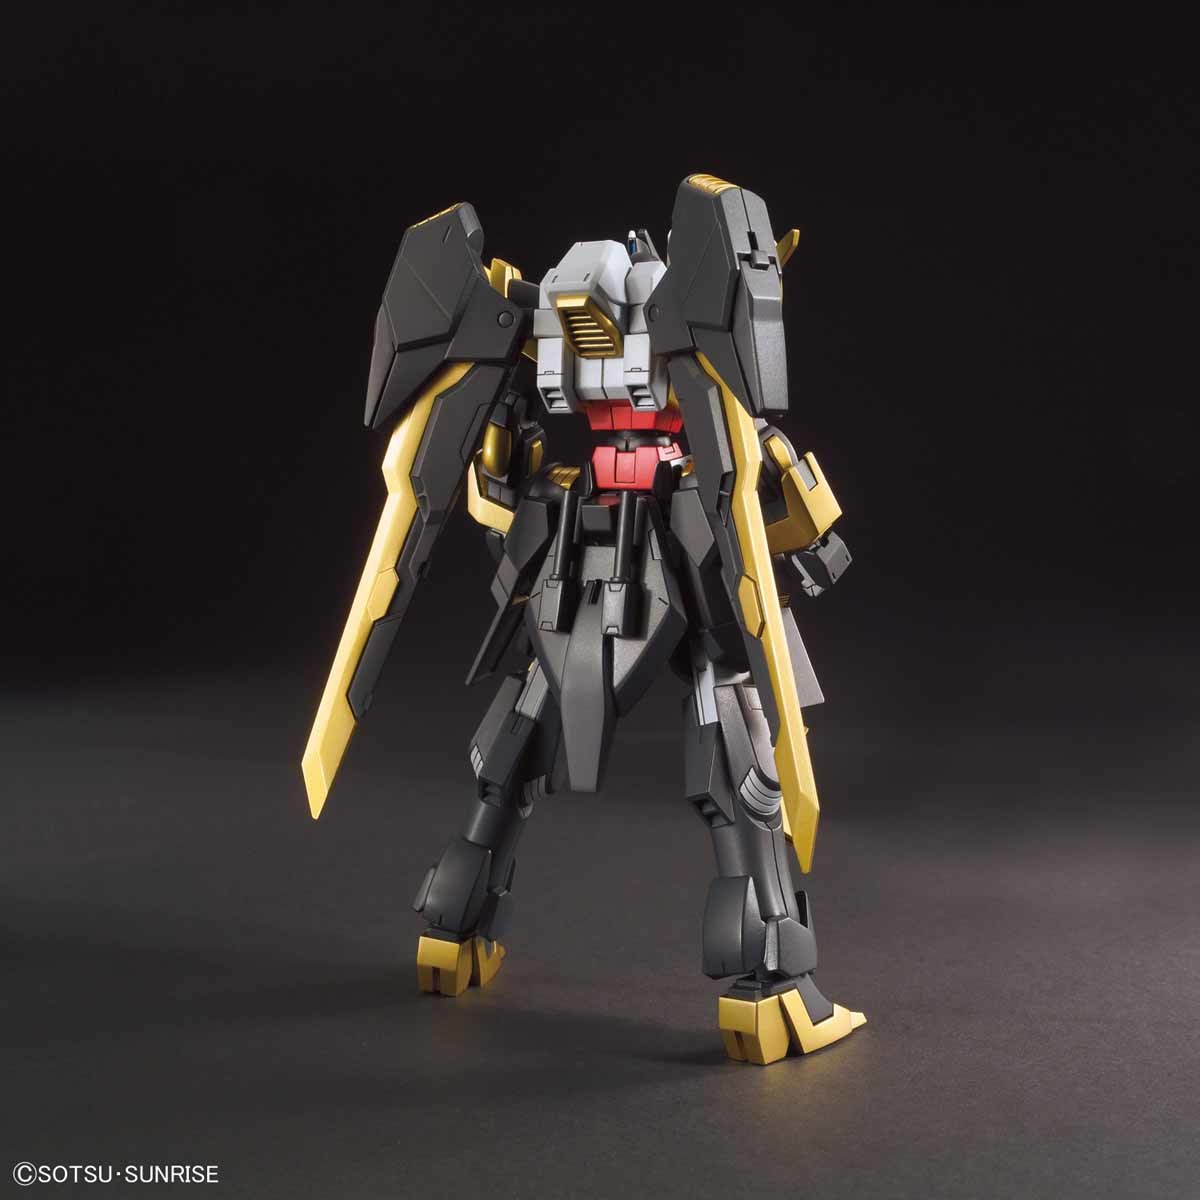 HGBF 1/144 Gundam Schwarzritter - Gundam Build Fighters